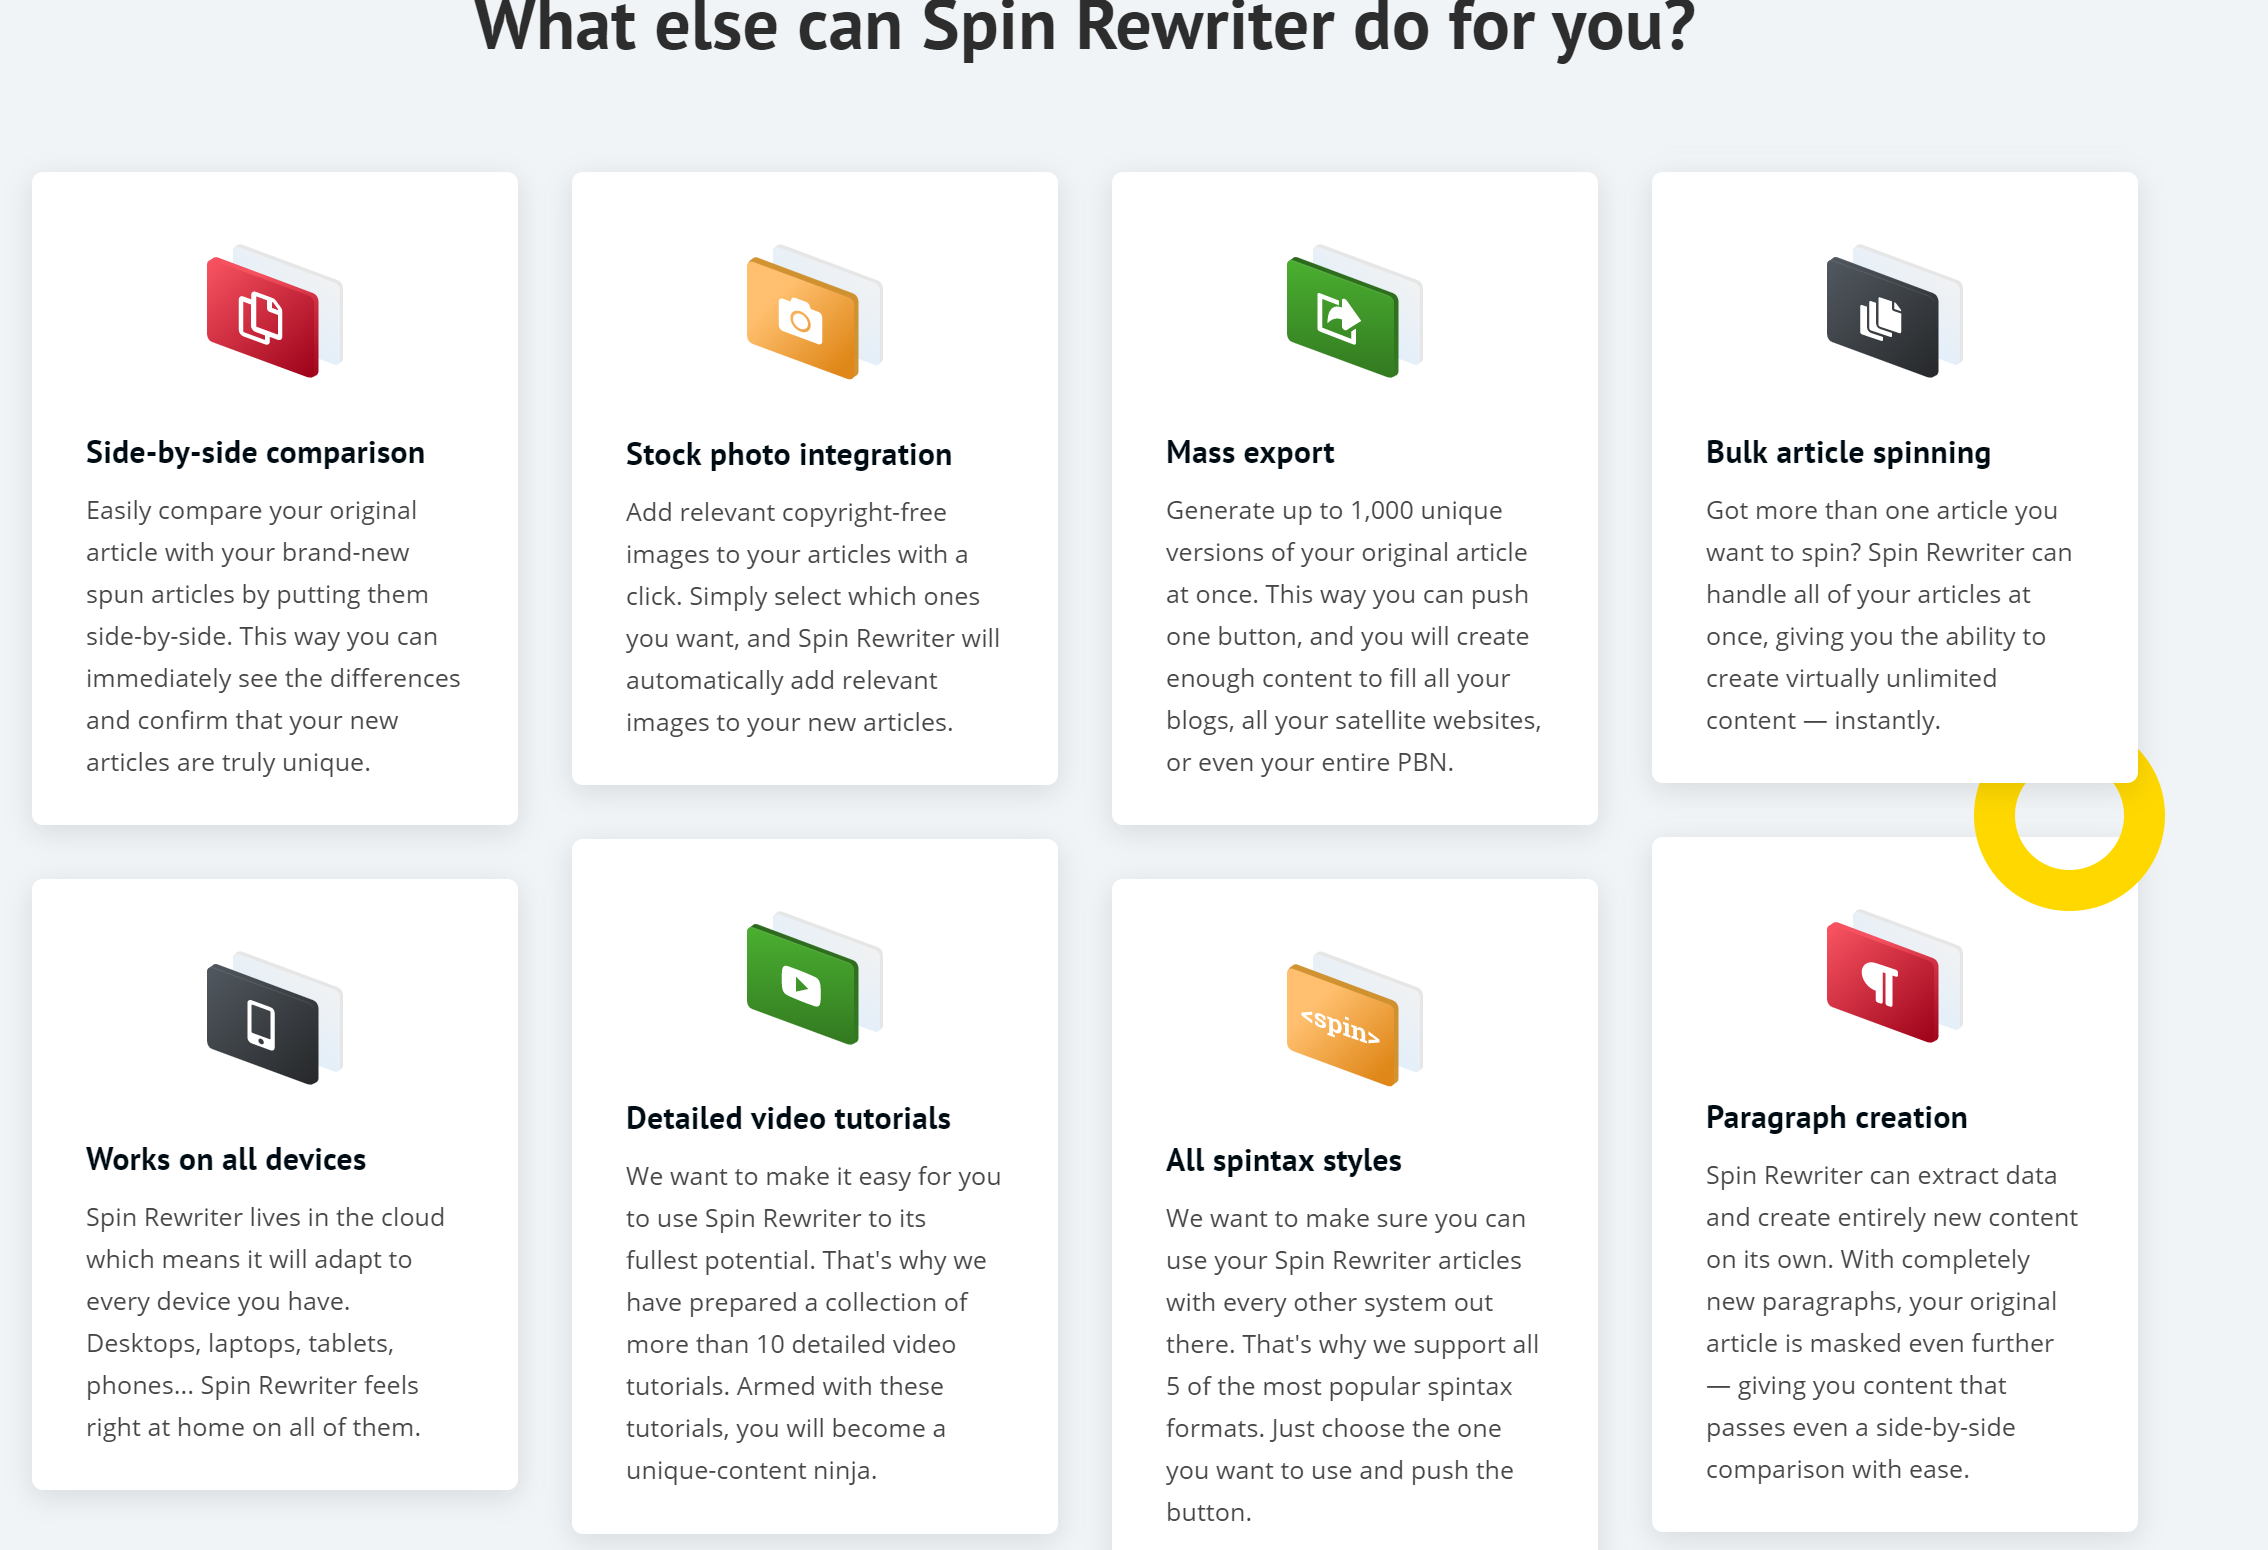 Spin Rewriter videos